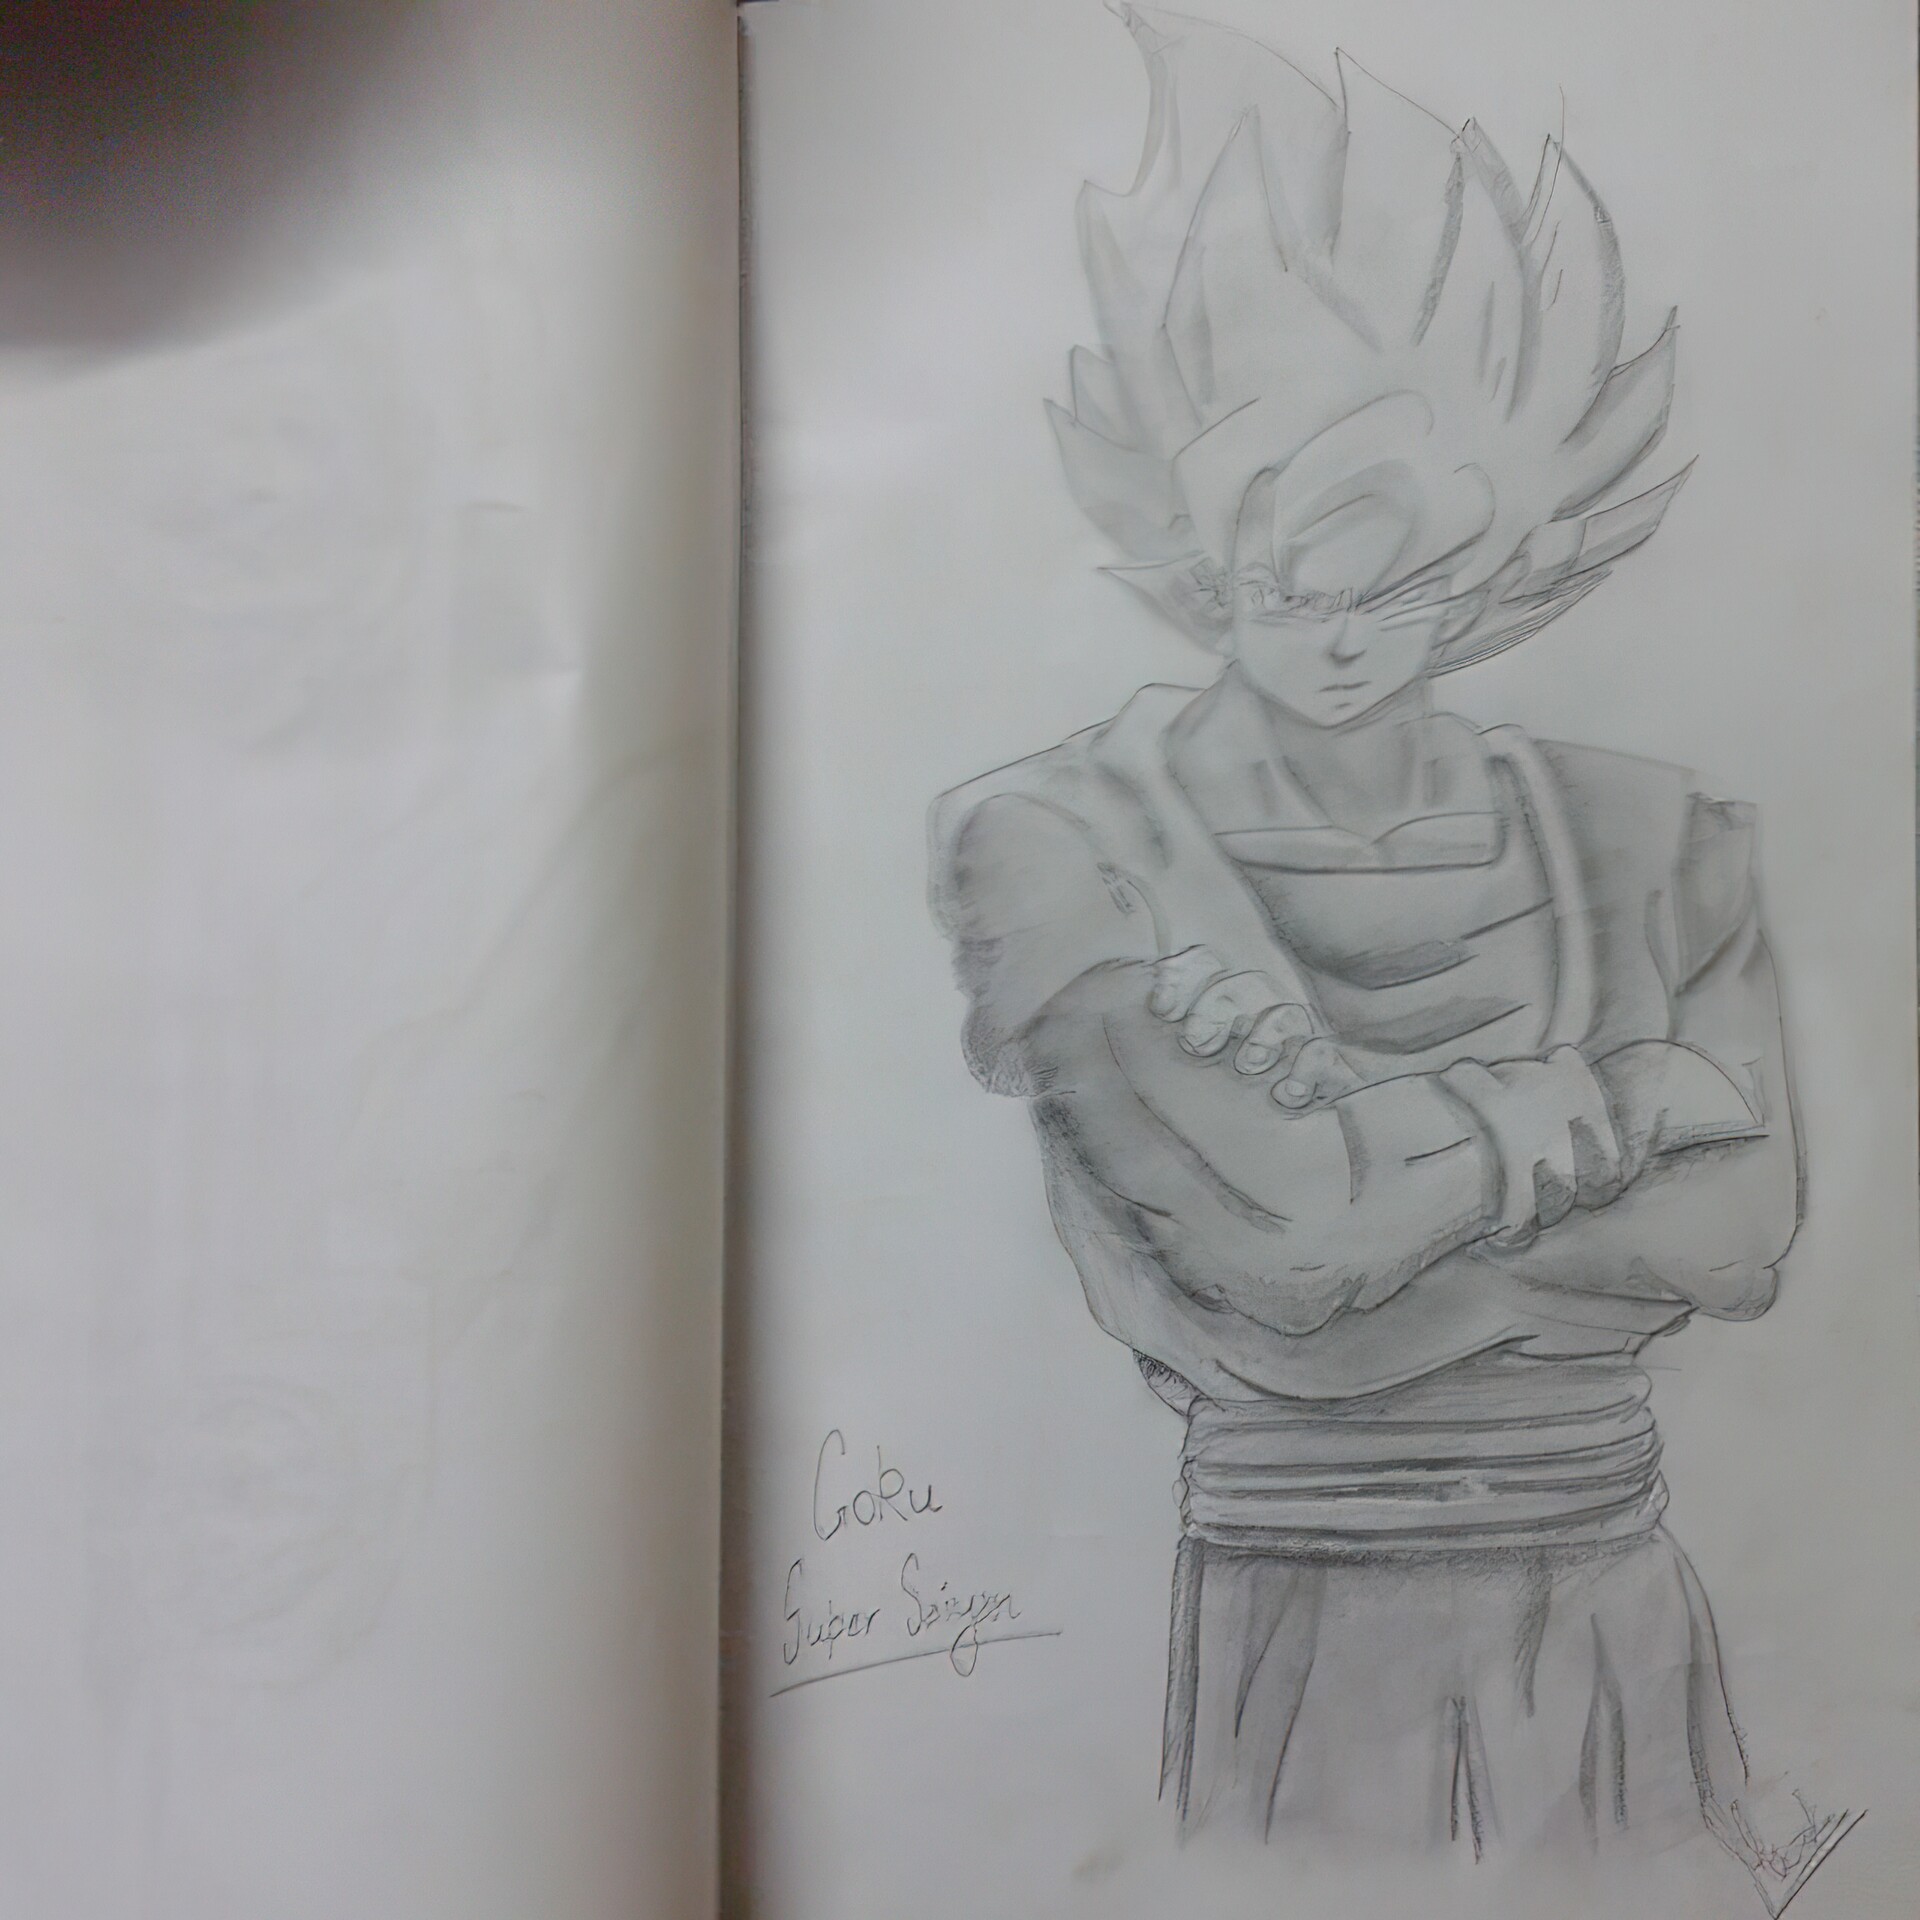 Goku pencil sketch dragon ball z 